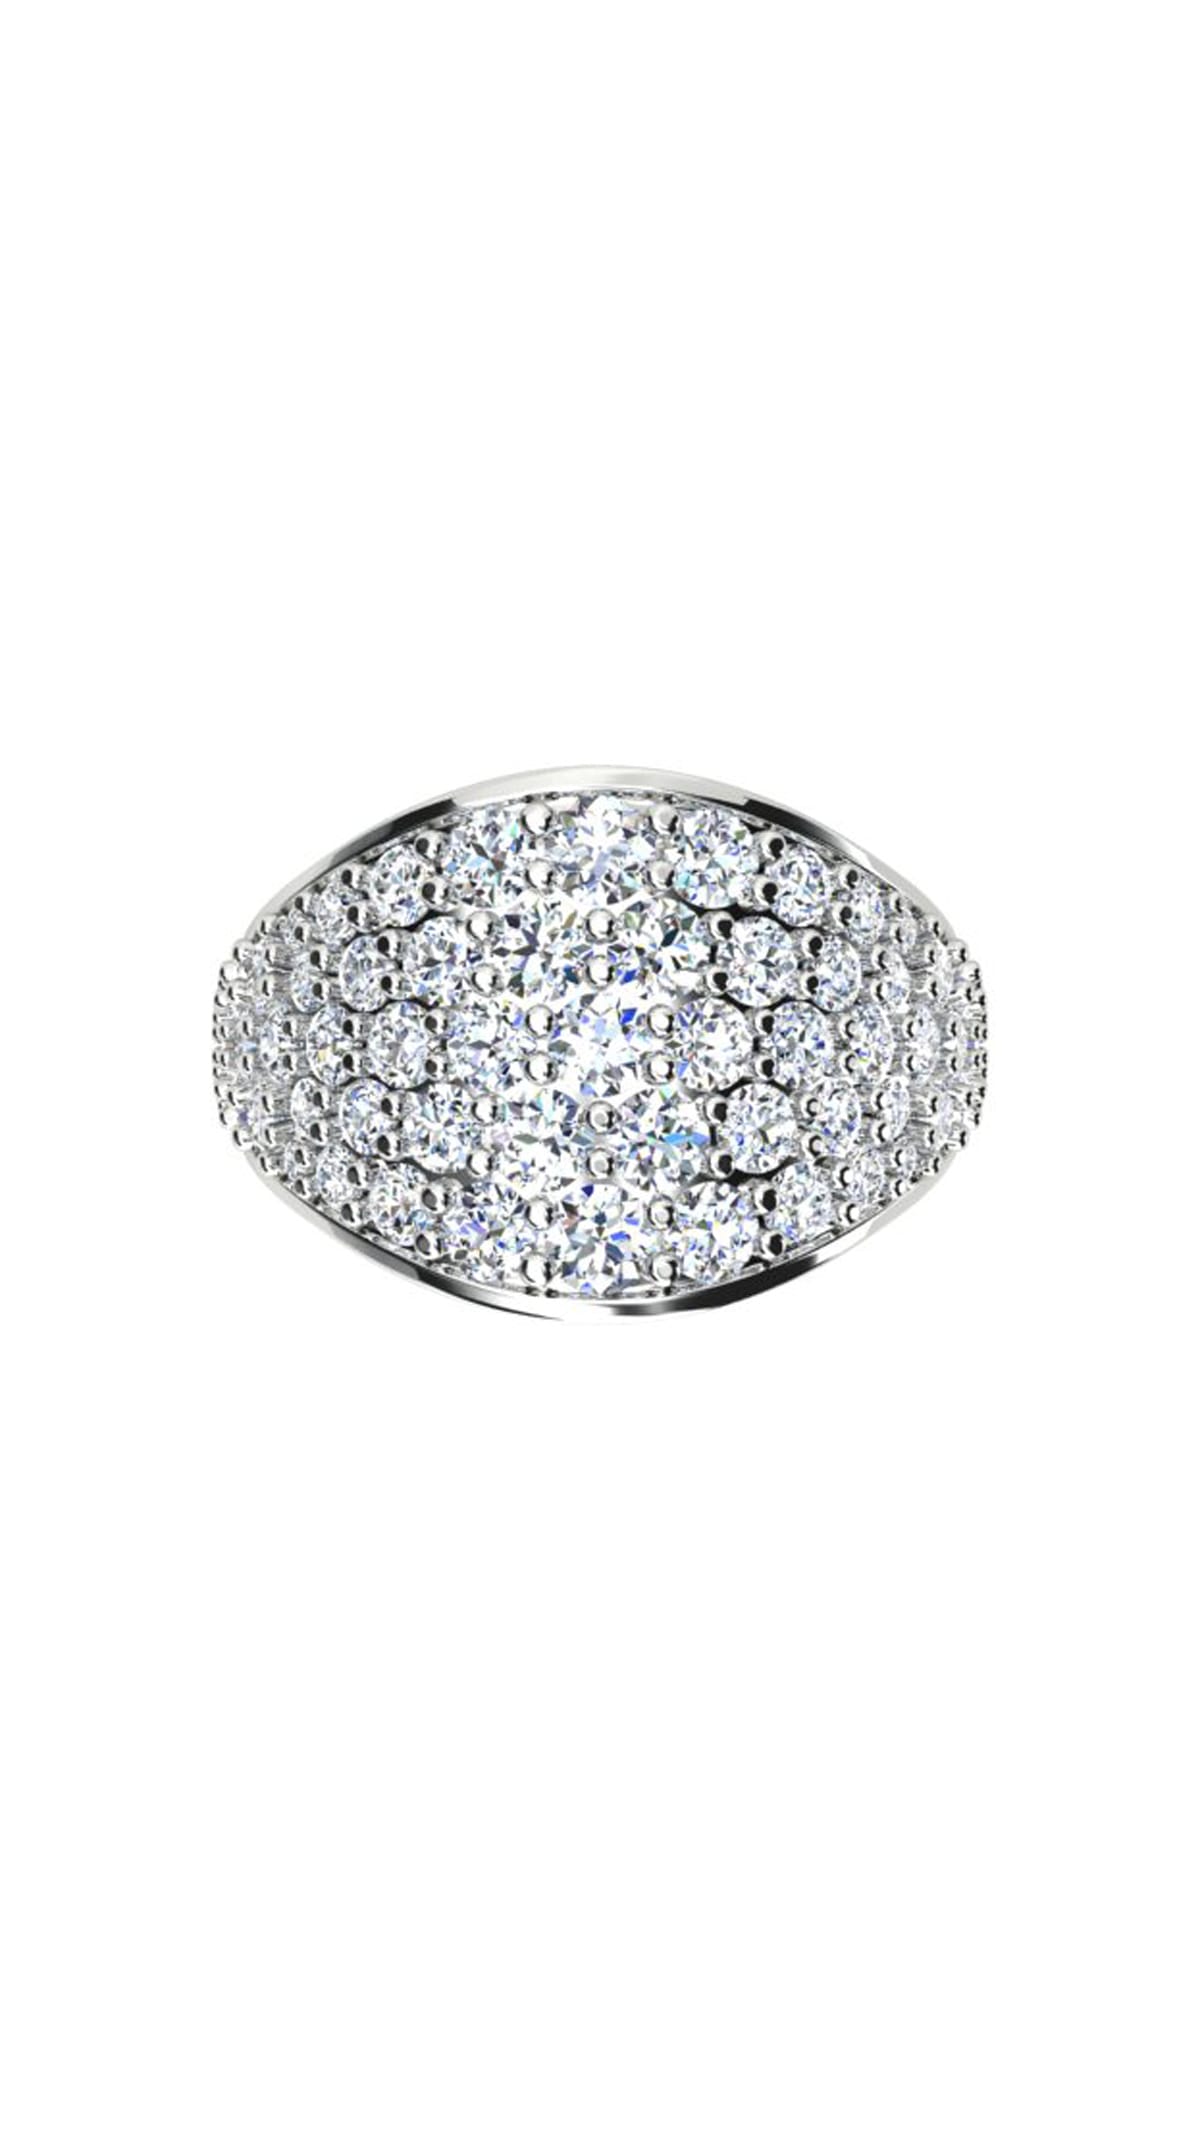 18 Carat White Gold Pave Set Diamond Ring available at LeGassick Diamonds and Jewellery Gold Coast, Australia.